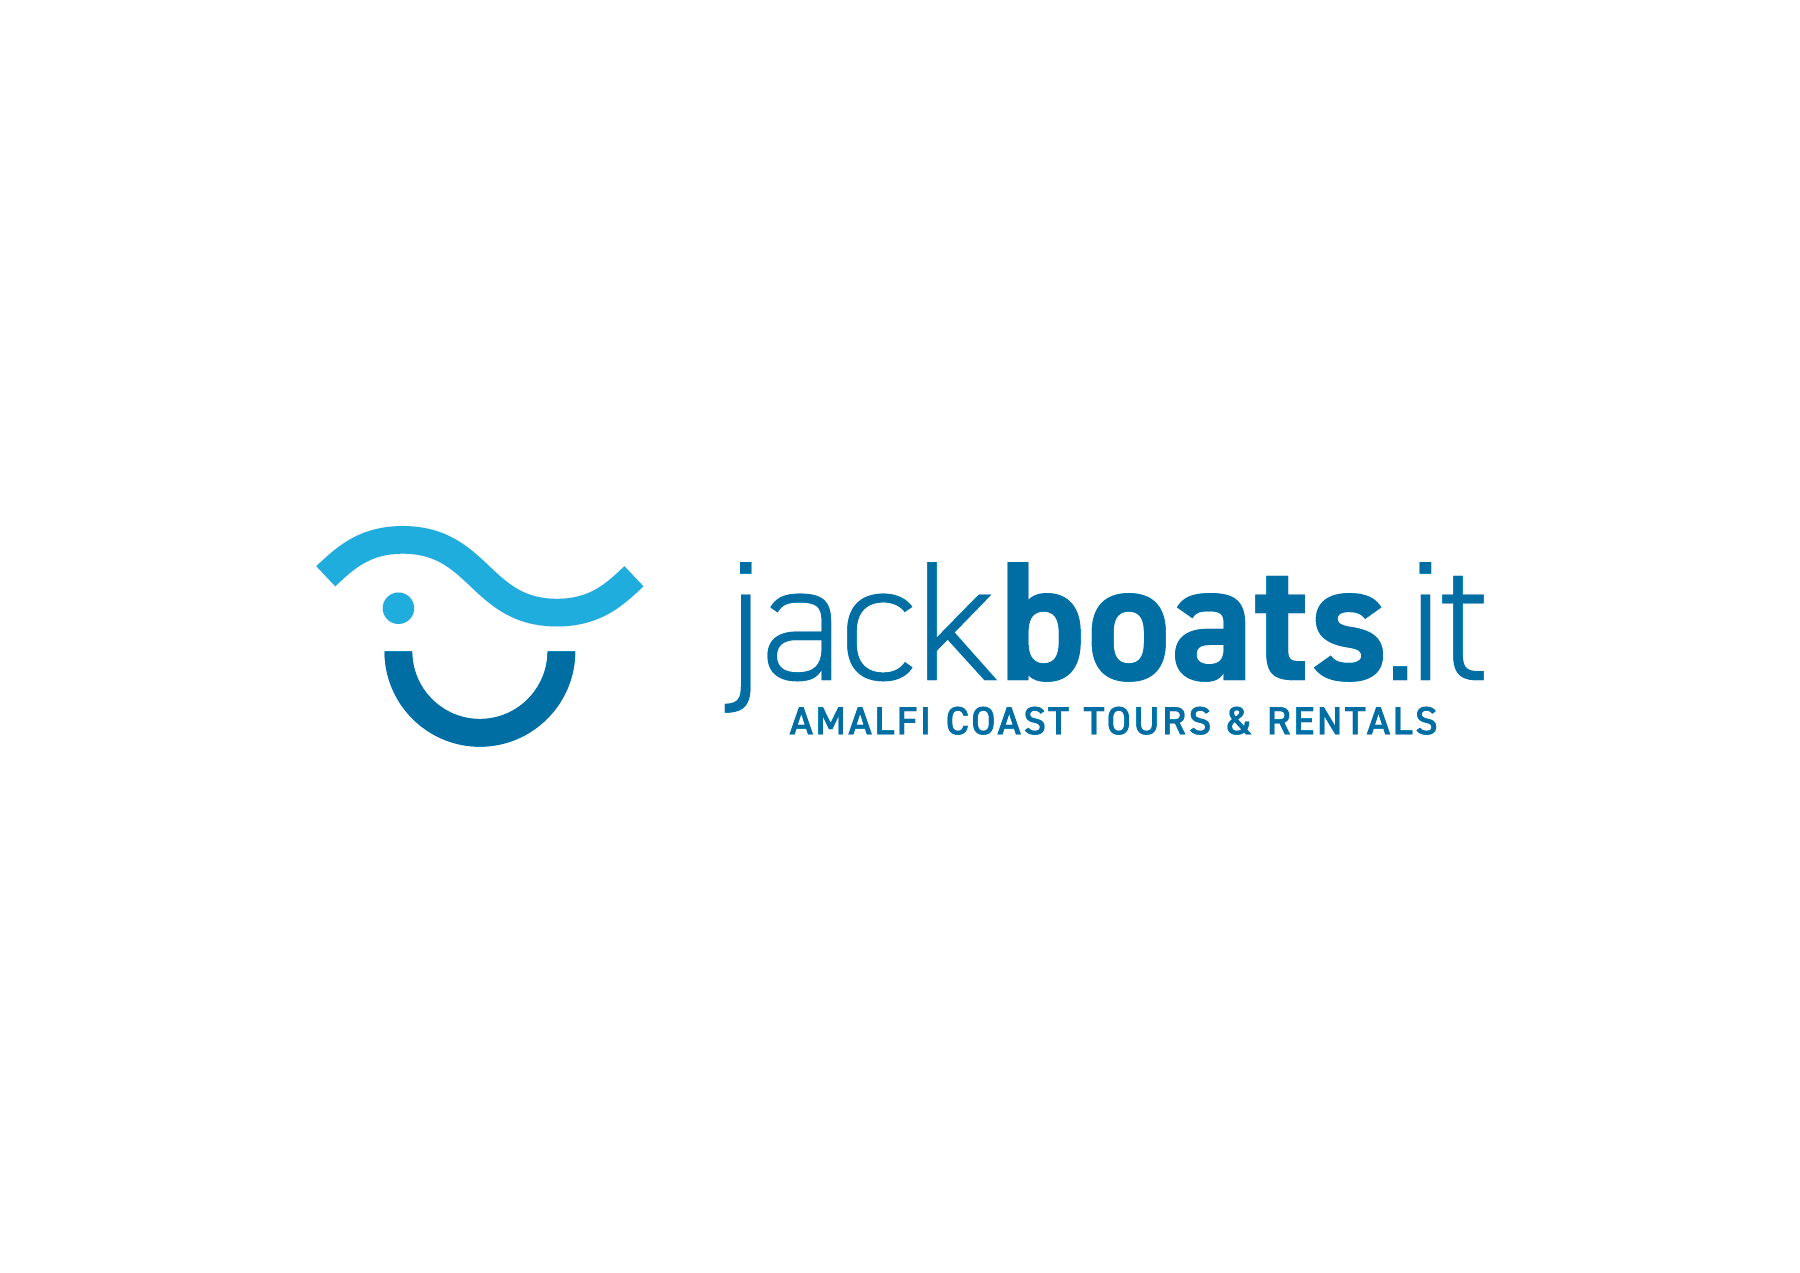 Logo design - jackboats.it